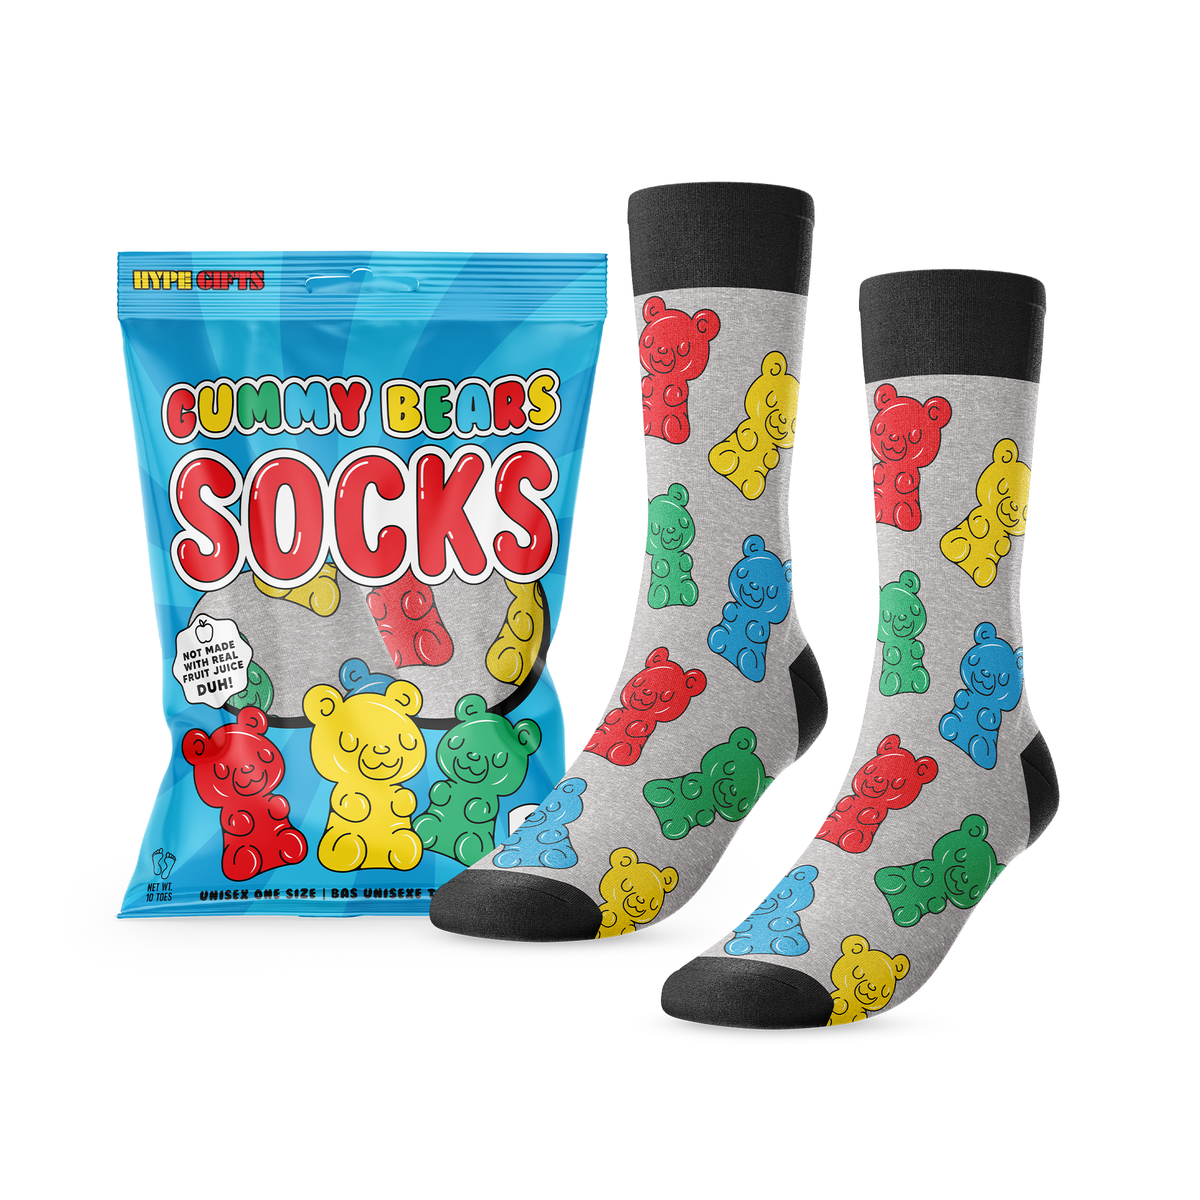 Chewy Gummy Bears Socks